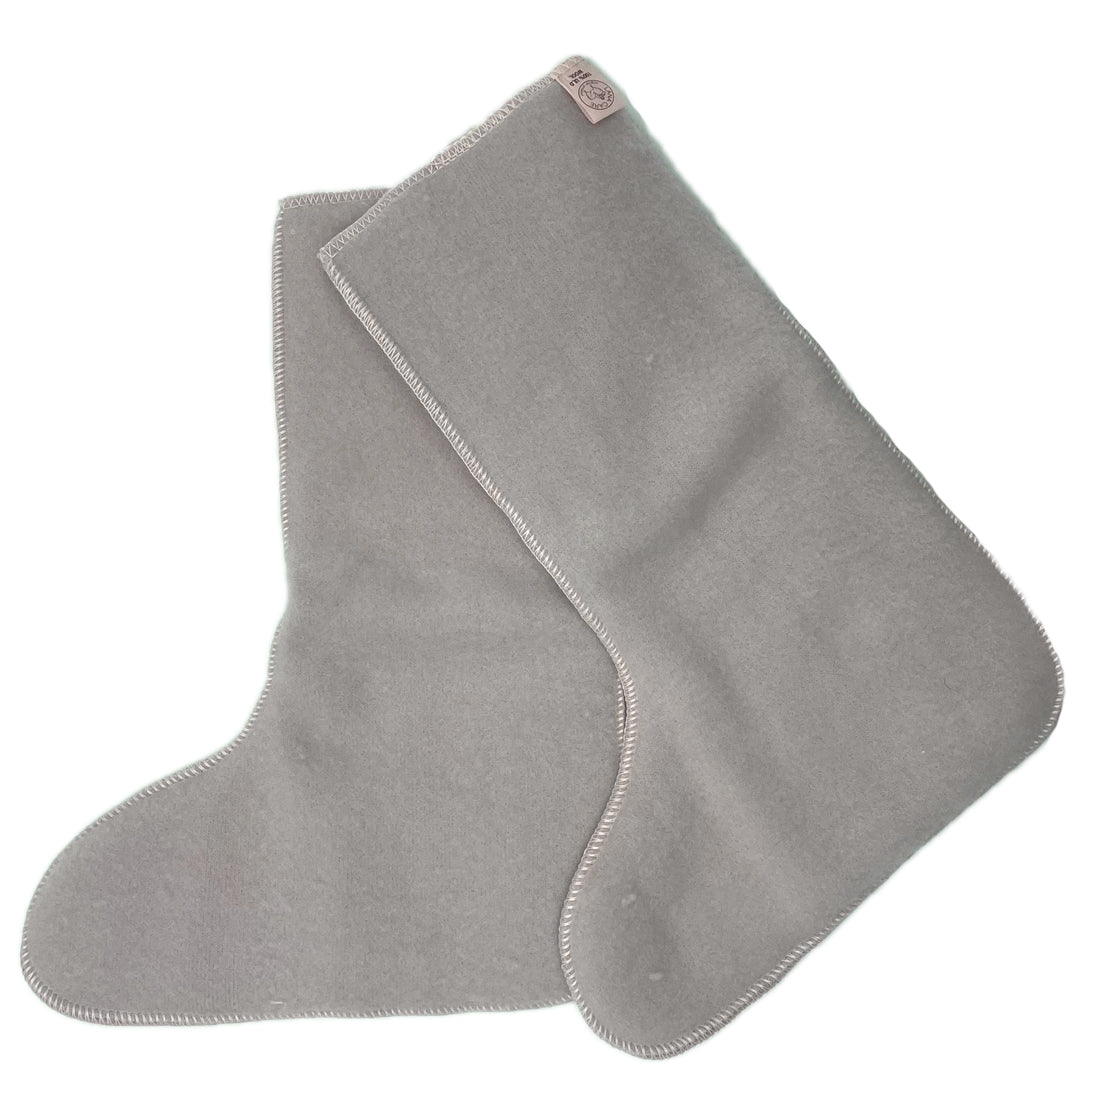 LANACare Bed Socks in Organic Merino Wool for Adults – Danish Woolen Delight